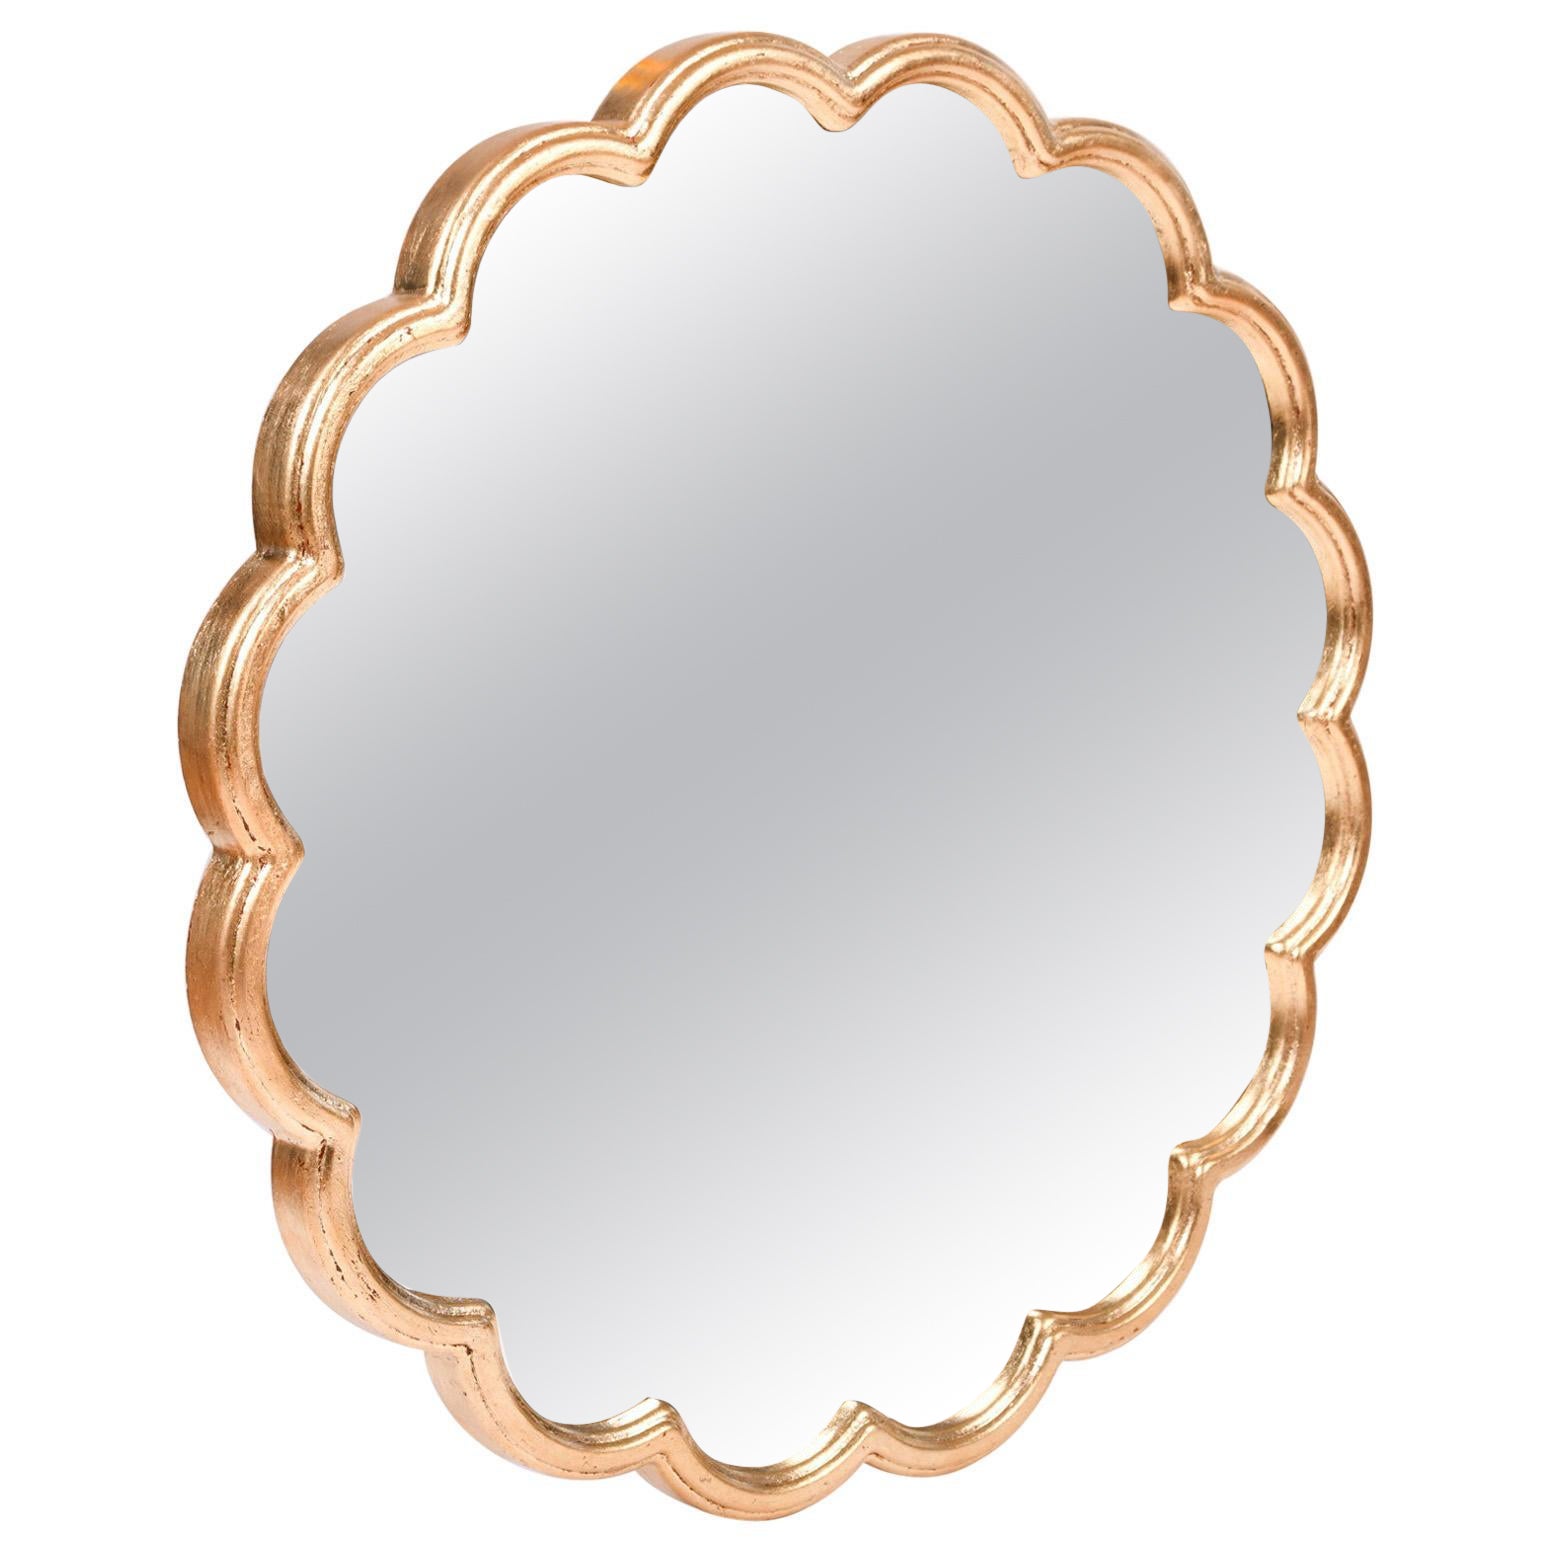 Miroir circulaire festonné 'Monaco' en feuille d'or